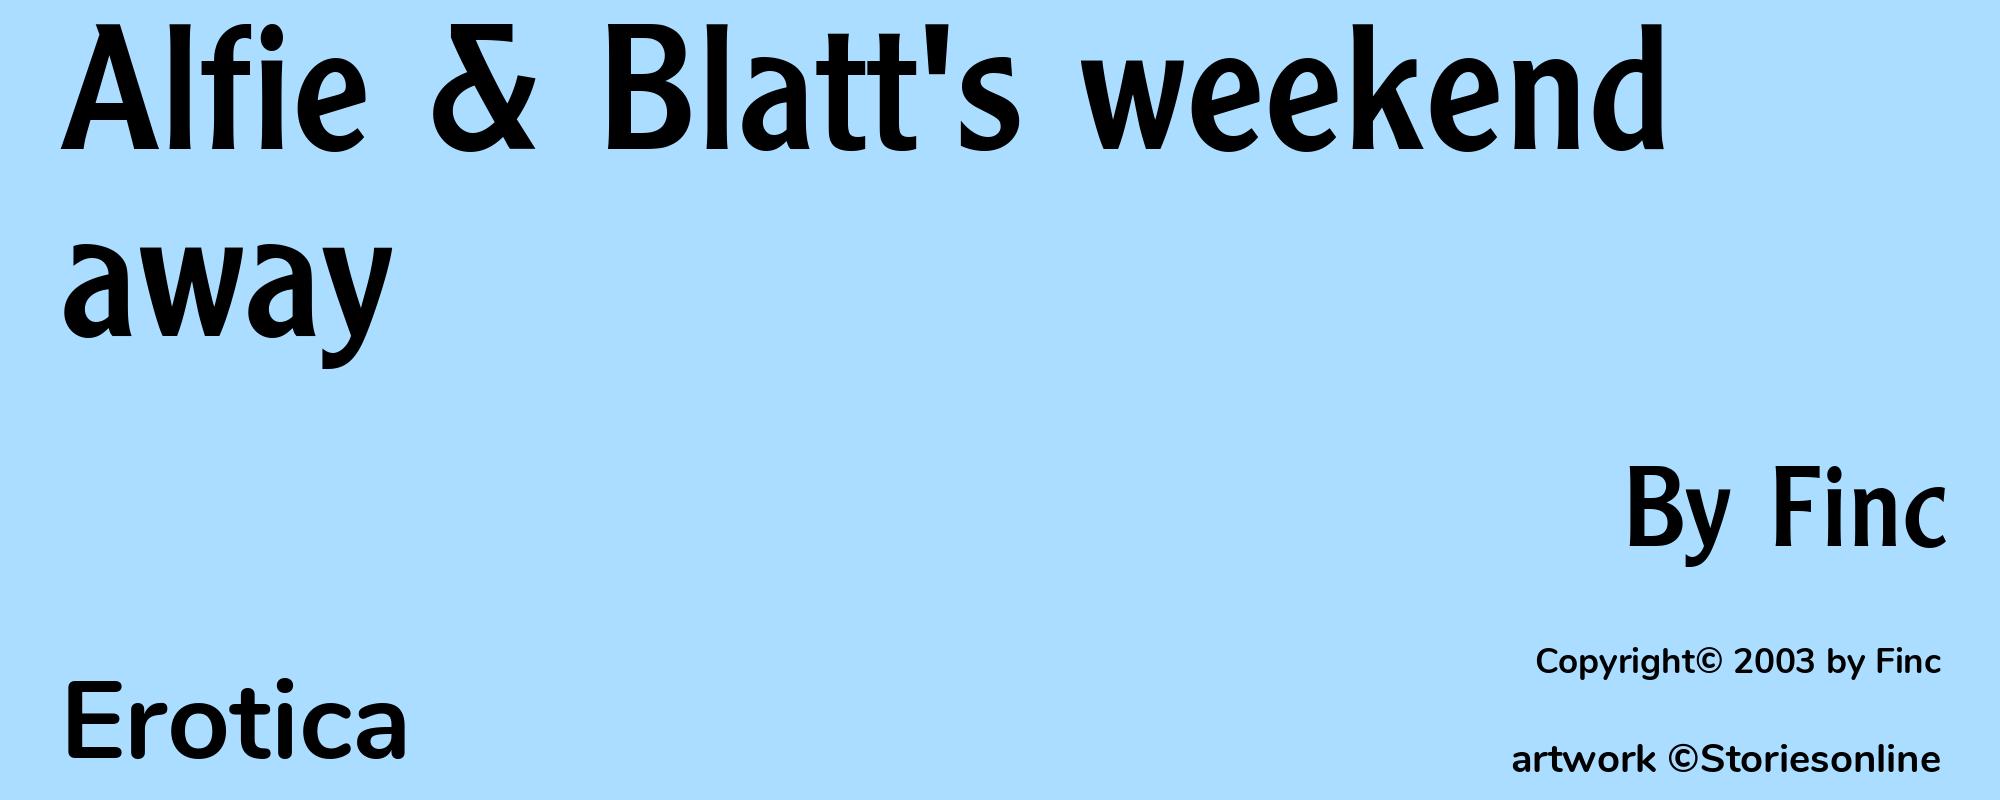 Alfie & Blatt's weekend away - Cover